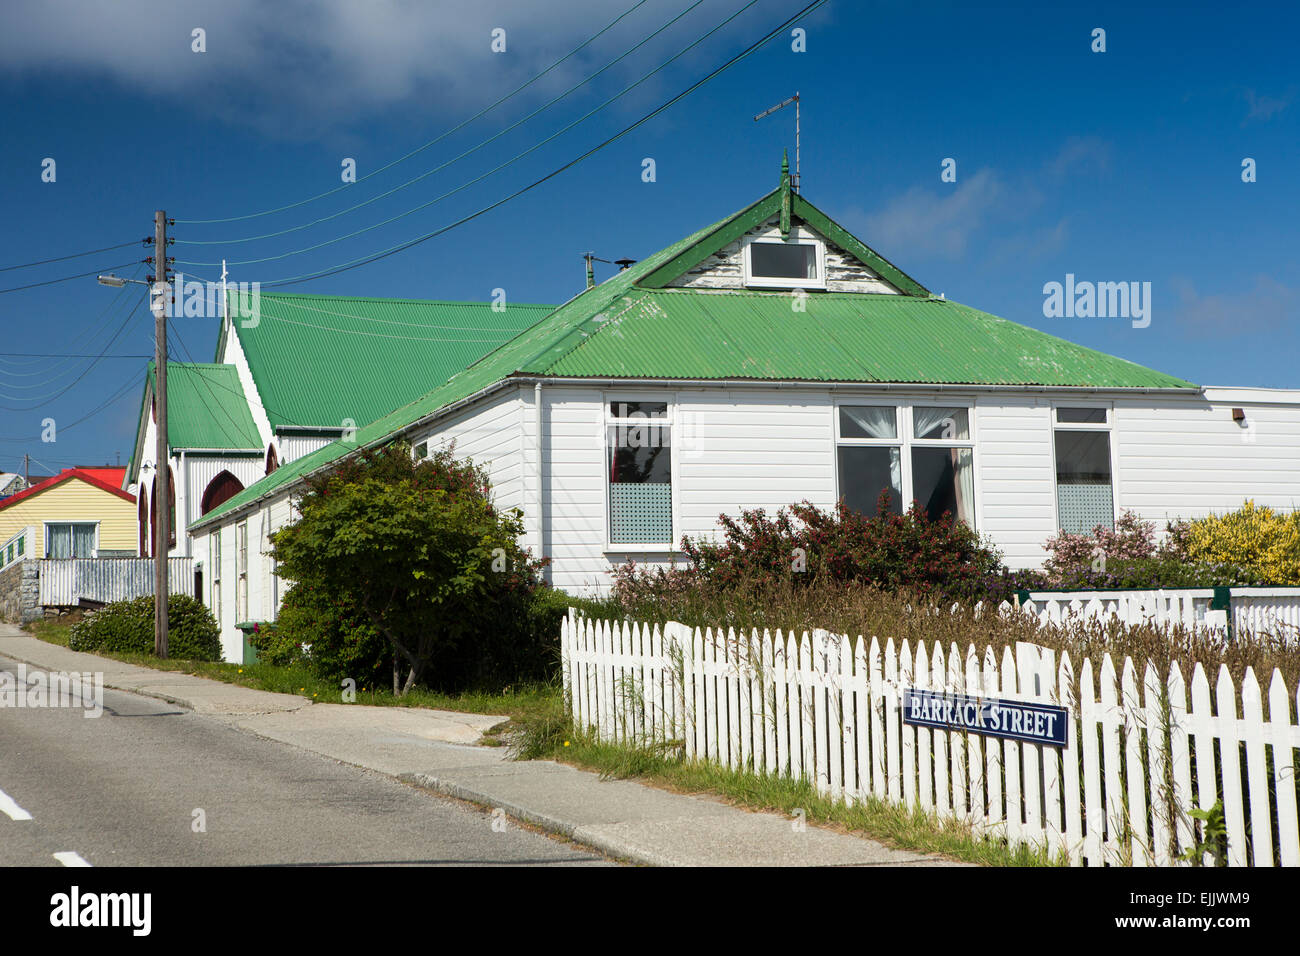 Falkland Port Stanley, Barrack Street, dal tetto verde casa e chiesa nonconformista Foto Stock